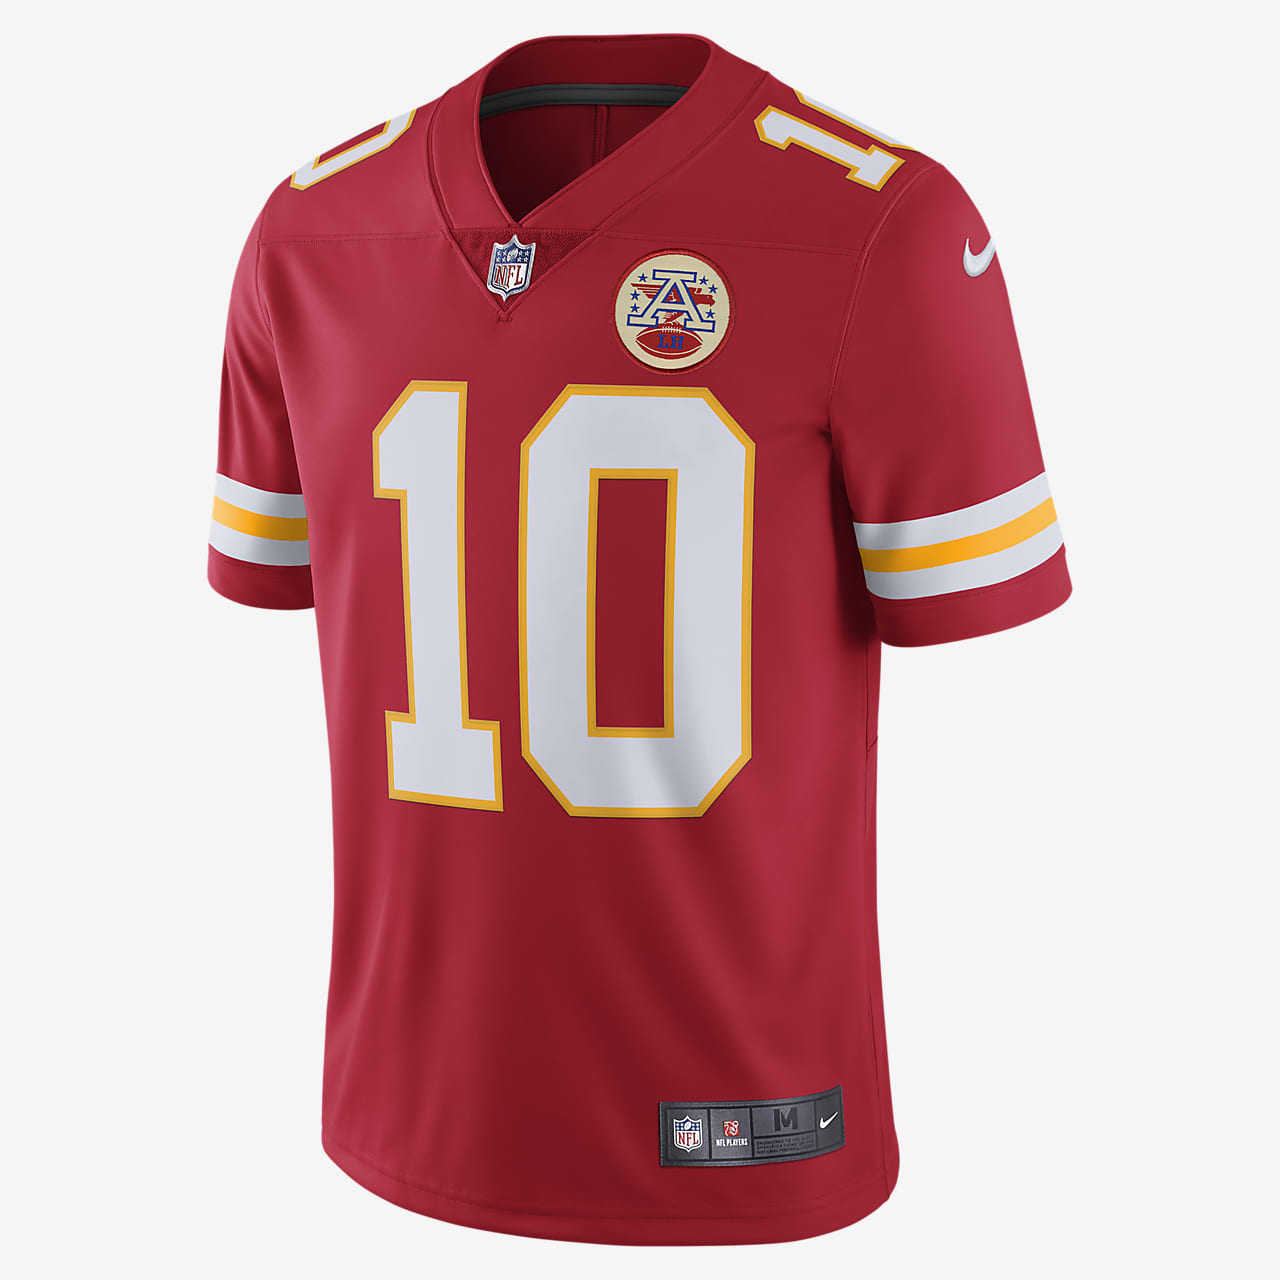 Camiseta de fútbol americano edición limitada para hombre NFL Kansas City  Chiefs Vapor Untouchable (Tyreek Hill). Nike.com